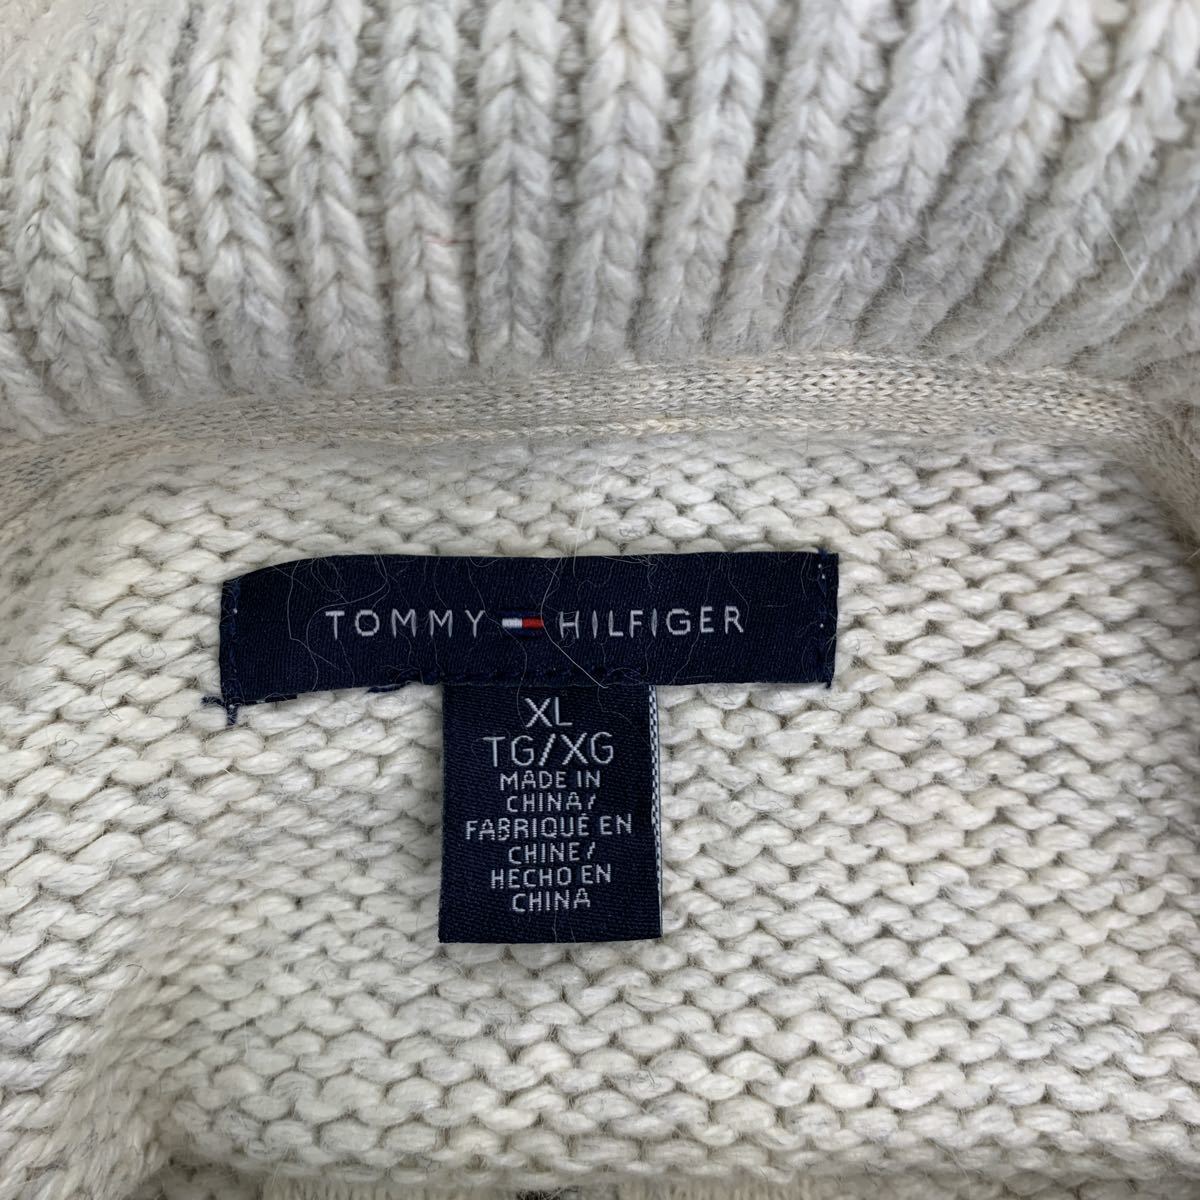 TOMMY HILFIGER Zip выше вязаный свитер XL размер Tommy Hilfiger женский "теплый" белый б/у одежда . America скупка t2202-4498